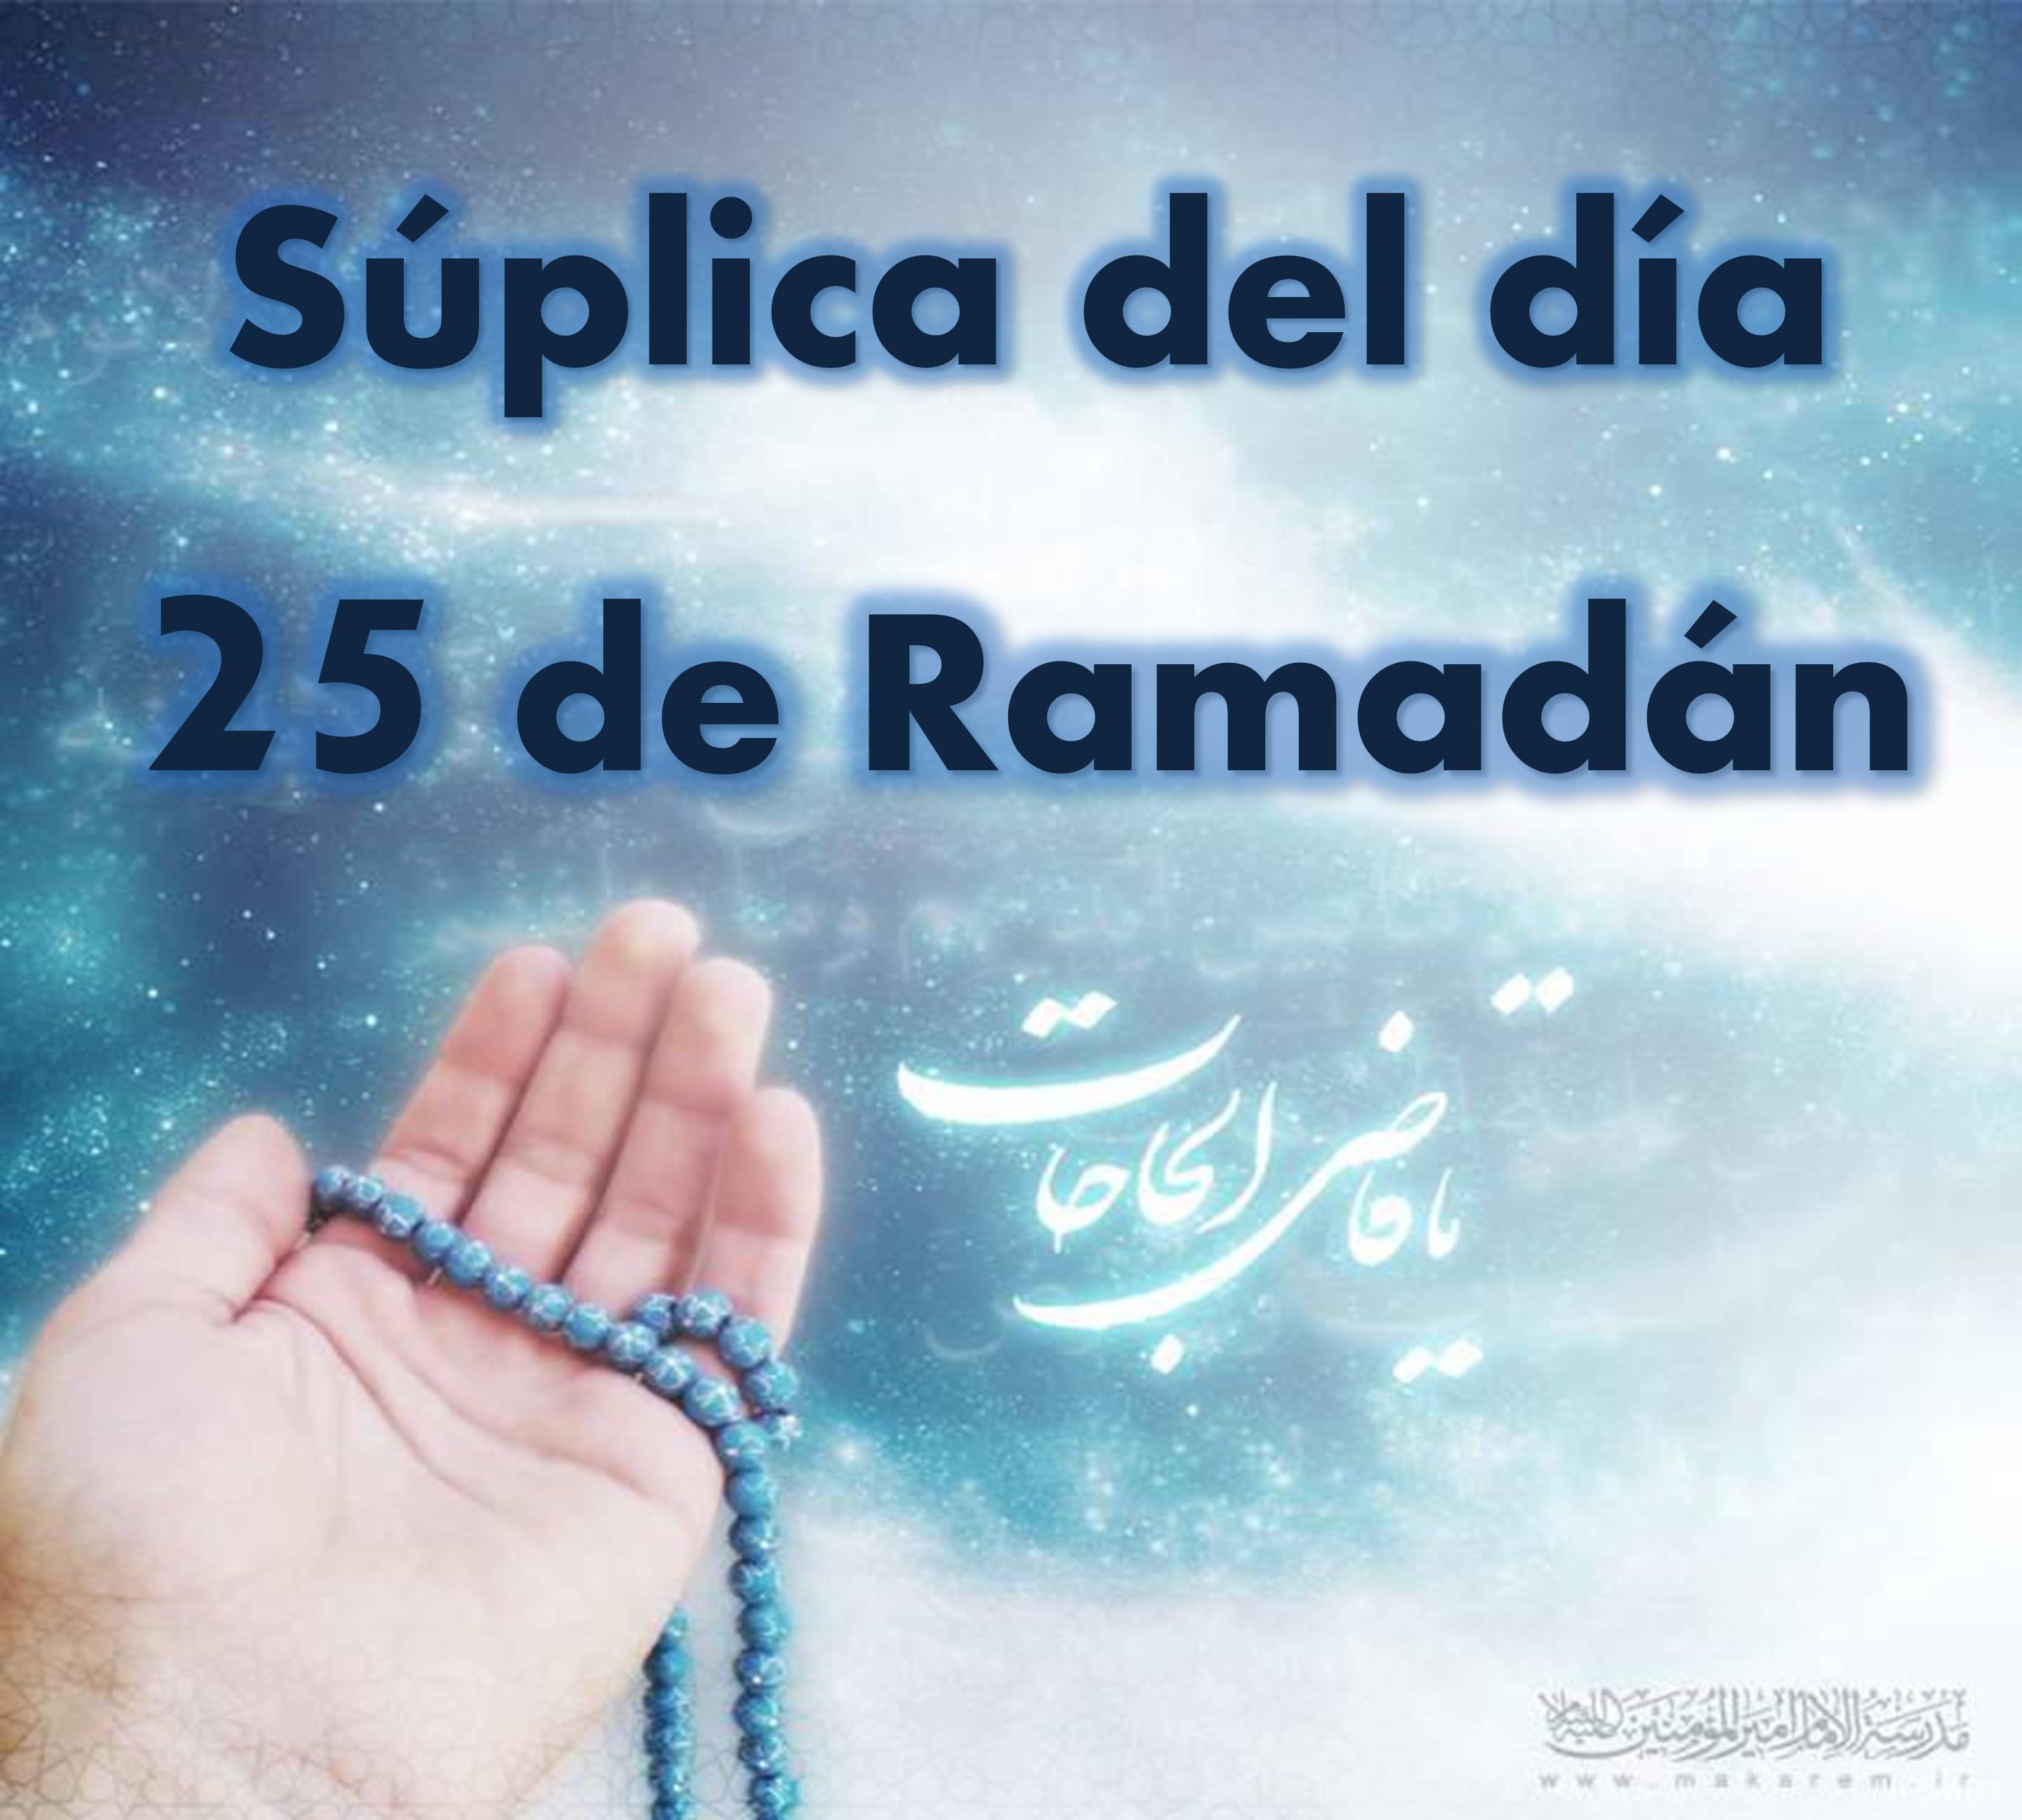 Súplica del vigésimo quin to día del mes de Ramadán comentada por el Ayatolá Makarem Shirazi